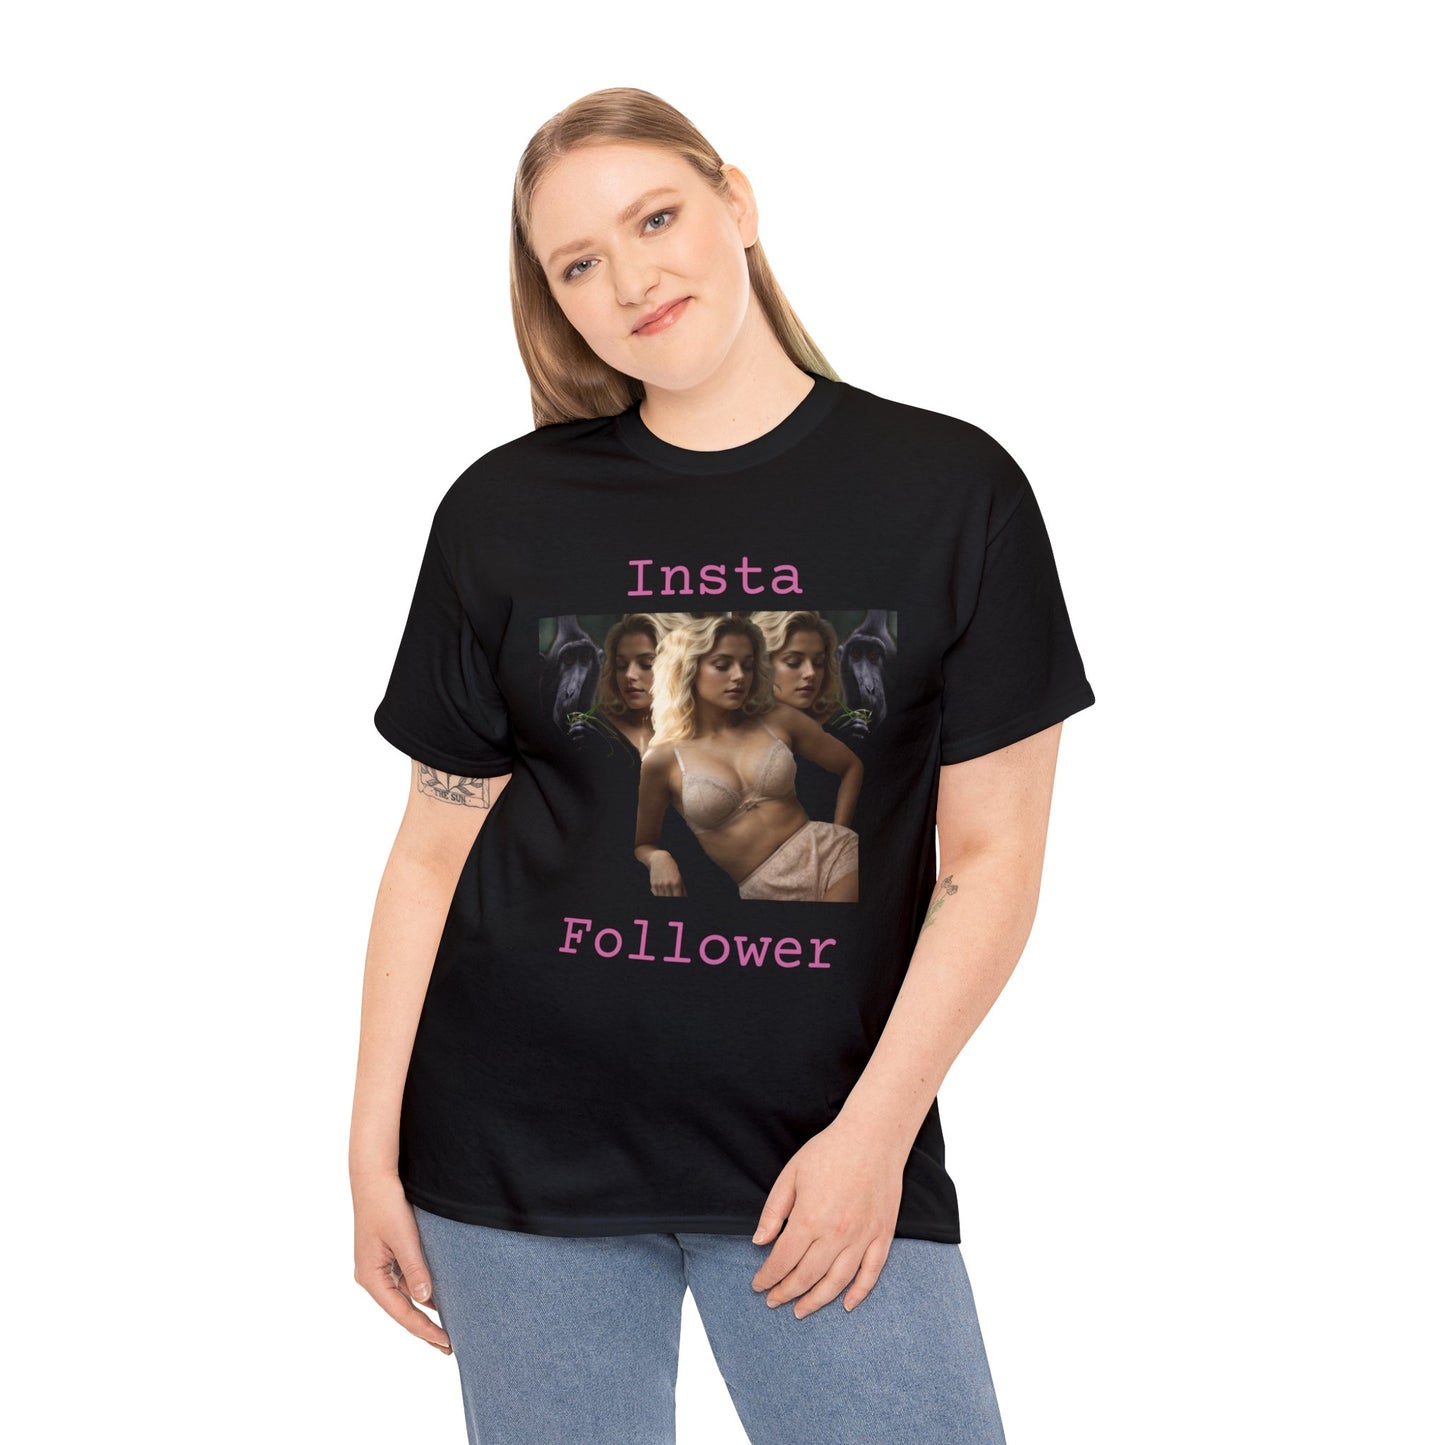 Insta Follower II - Hurts Shirts Collection